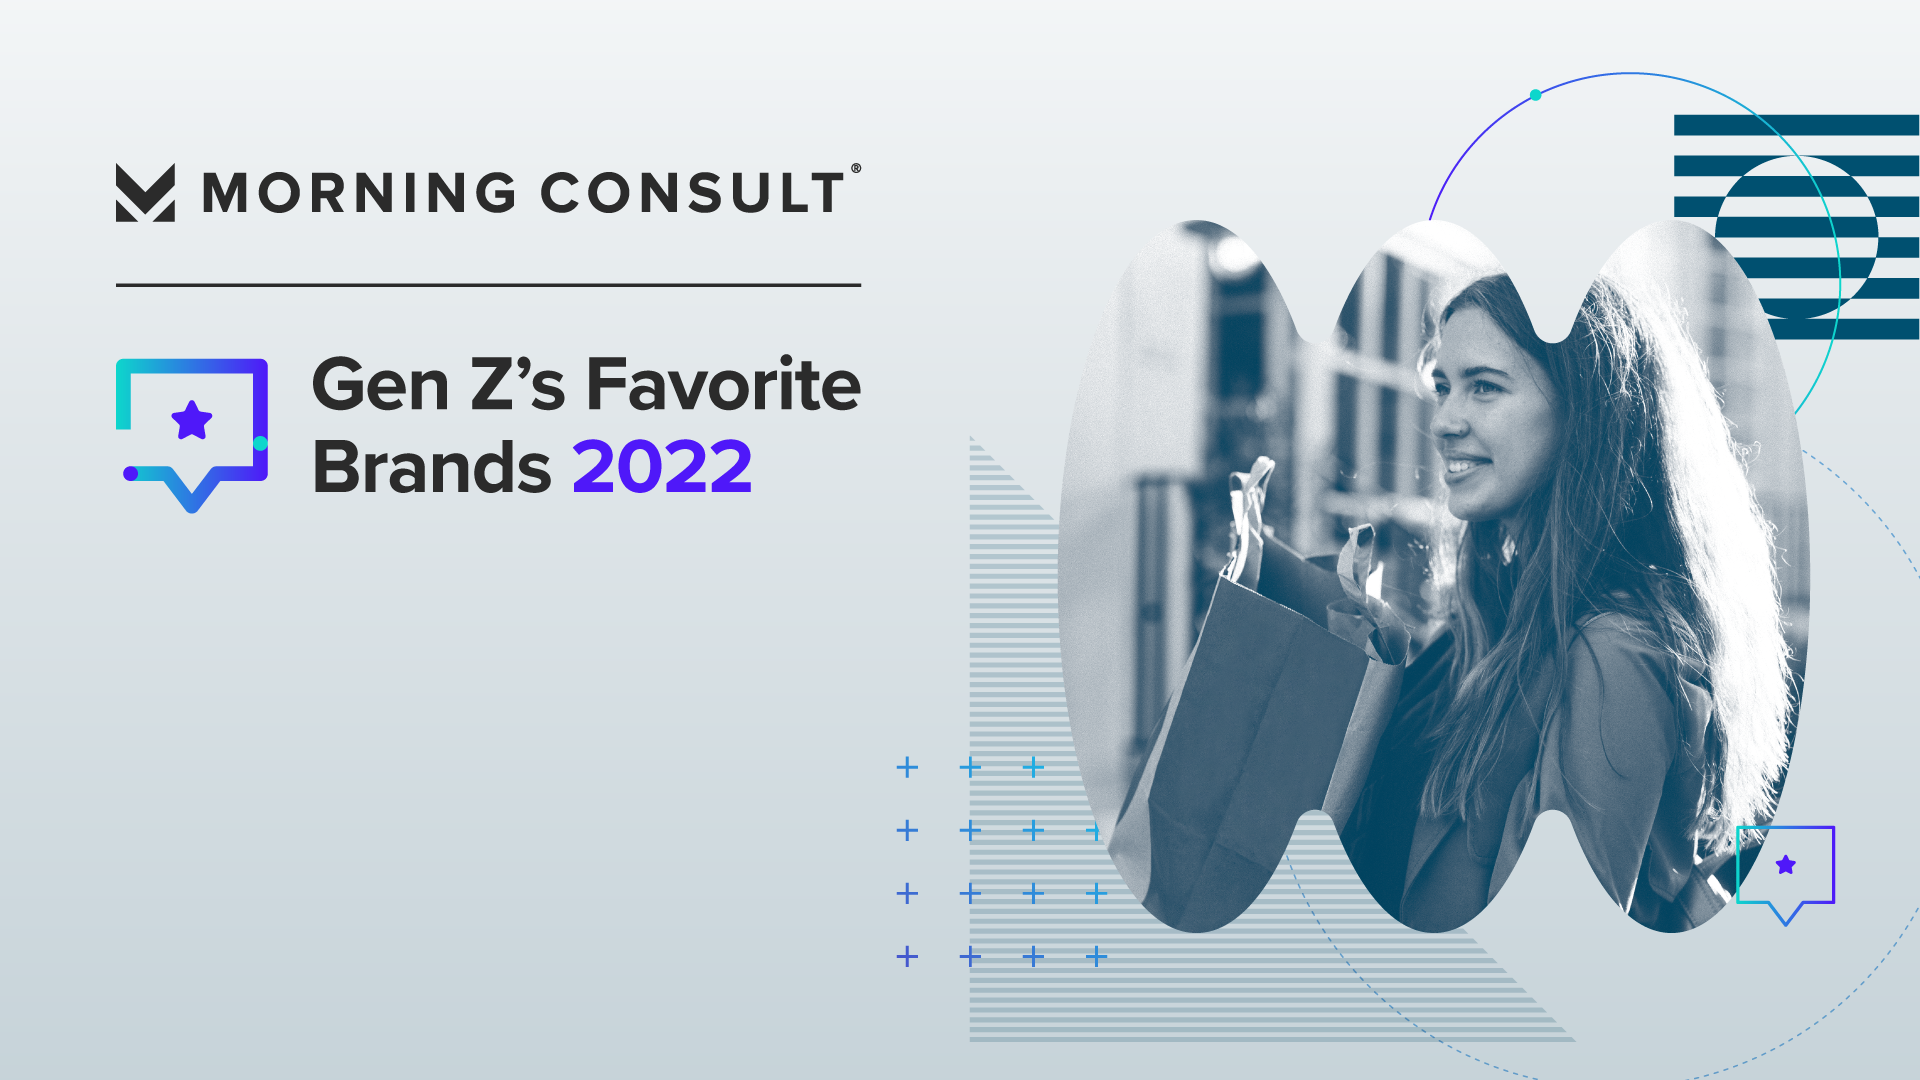 Morning Consult's Gen Z's Favorite Brands 2022